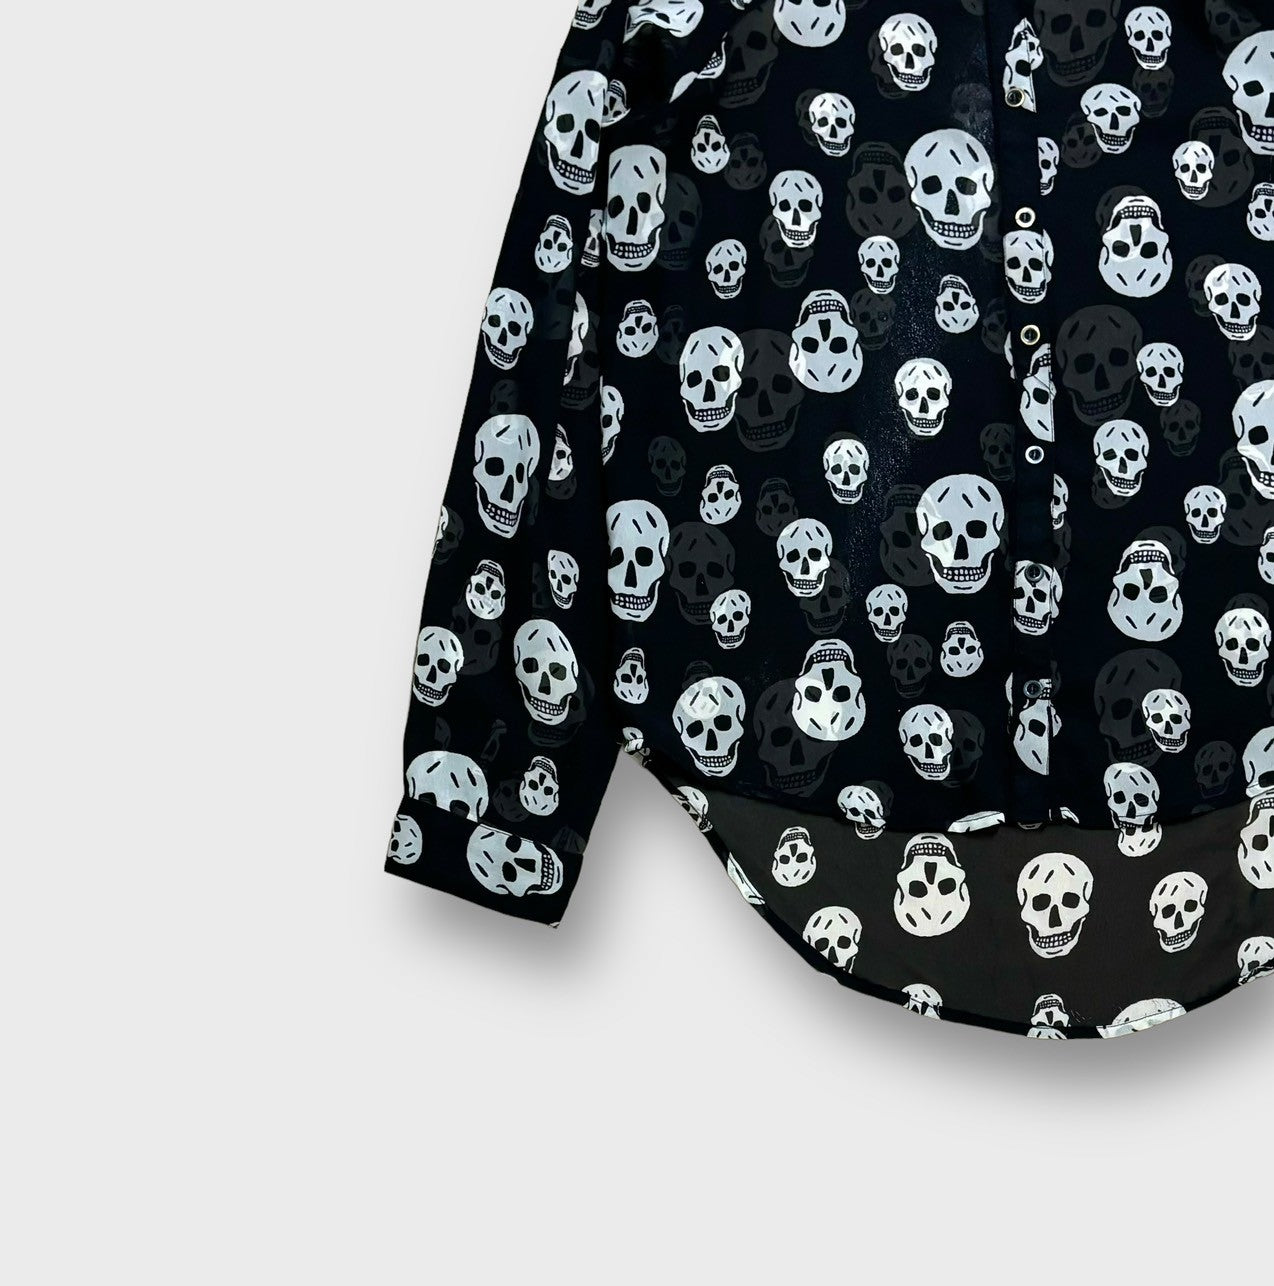 "fun&flirt" skull design shirt